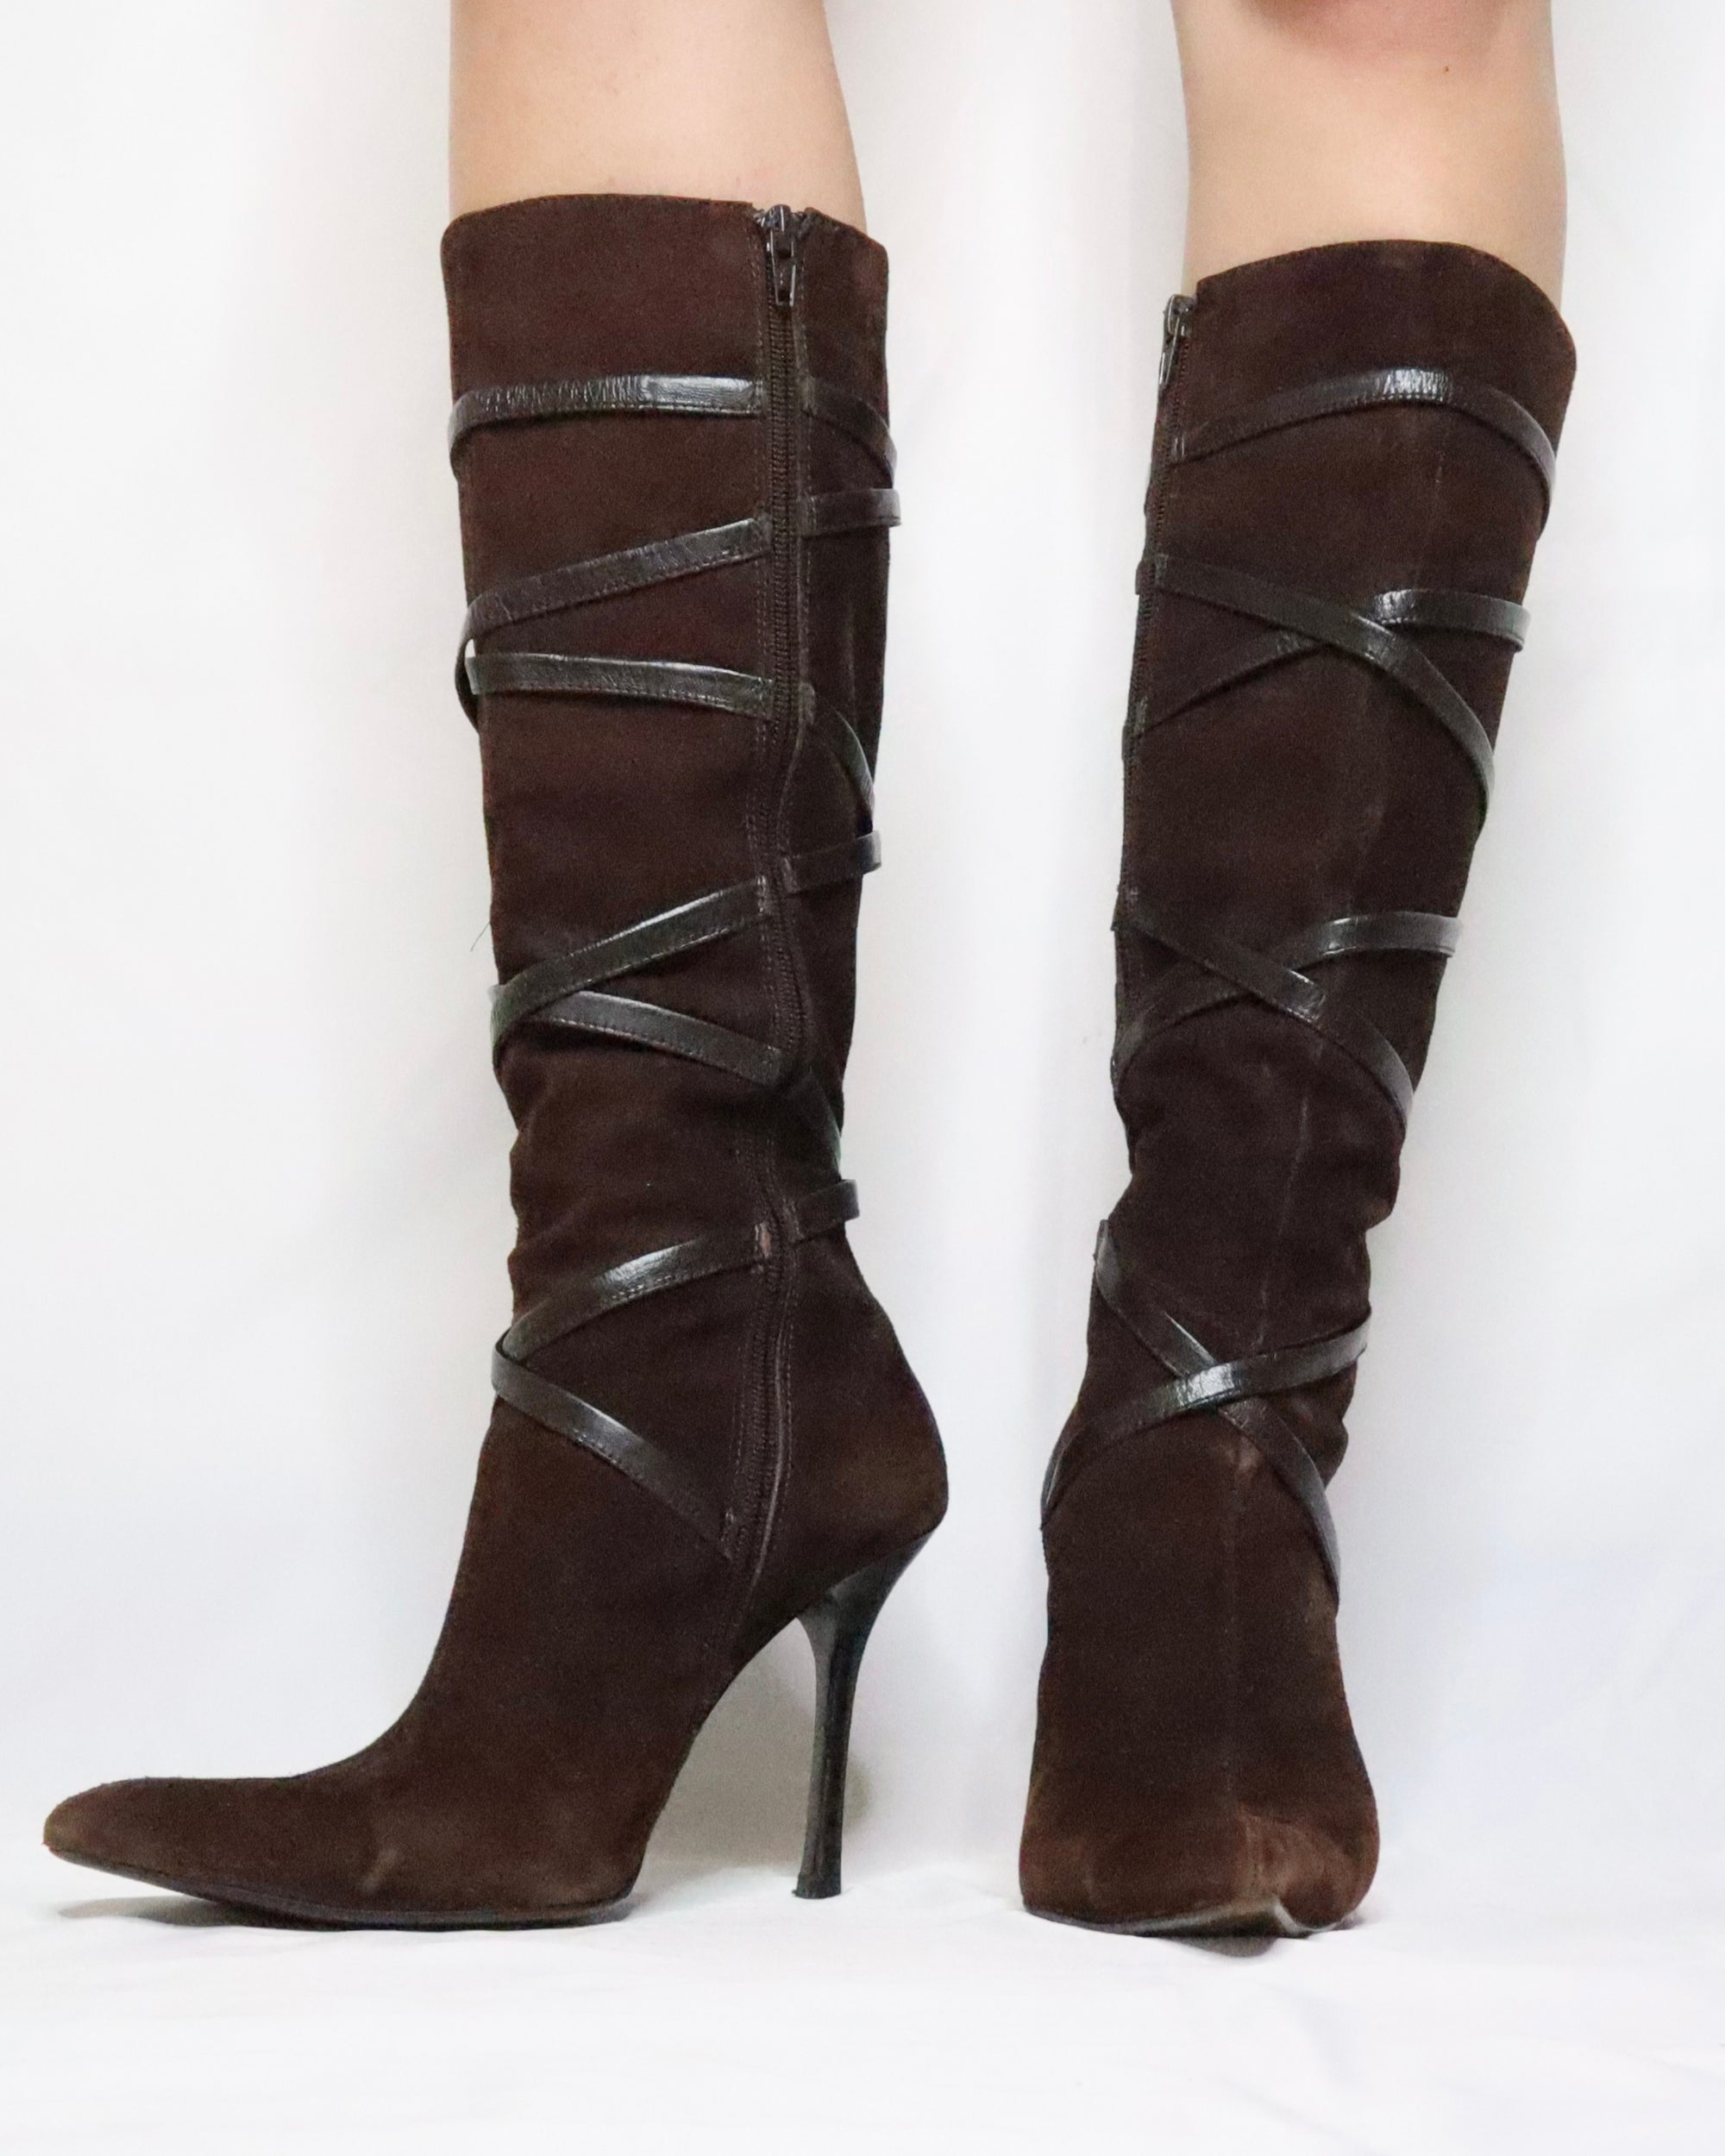 Knee High Stiletto Boots (6.5 US/37 EU)